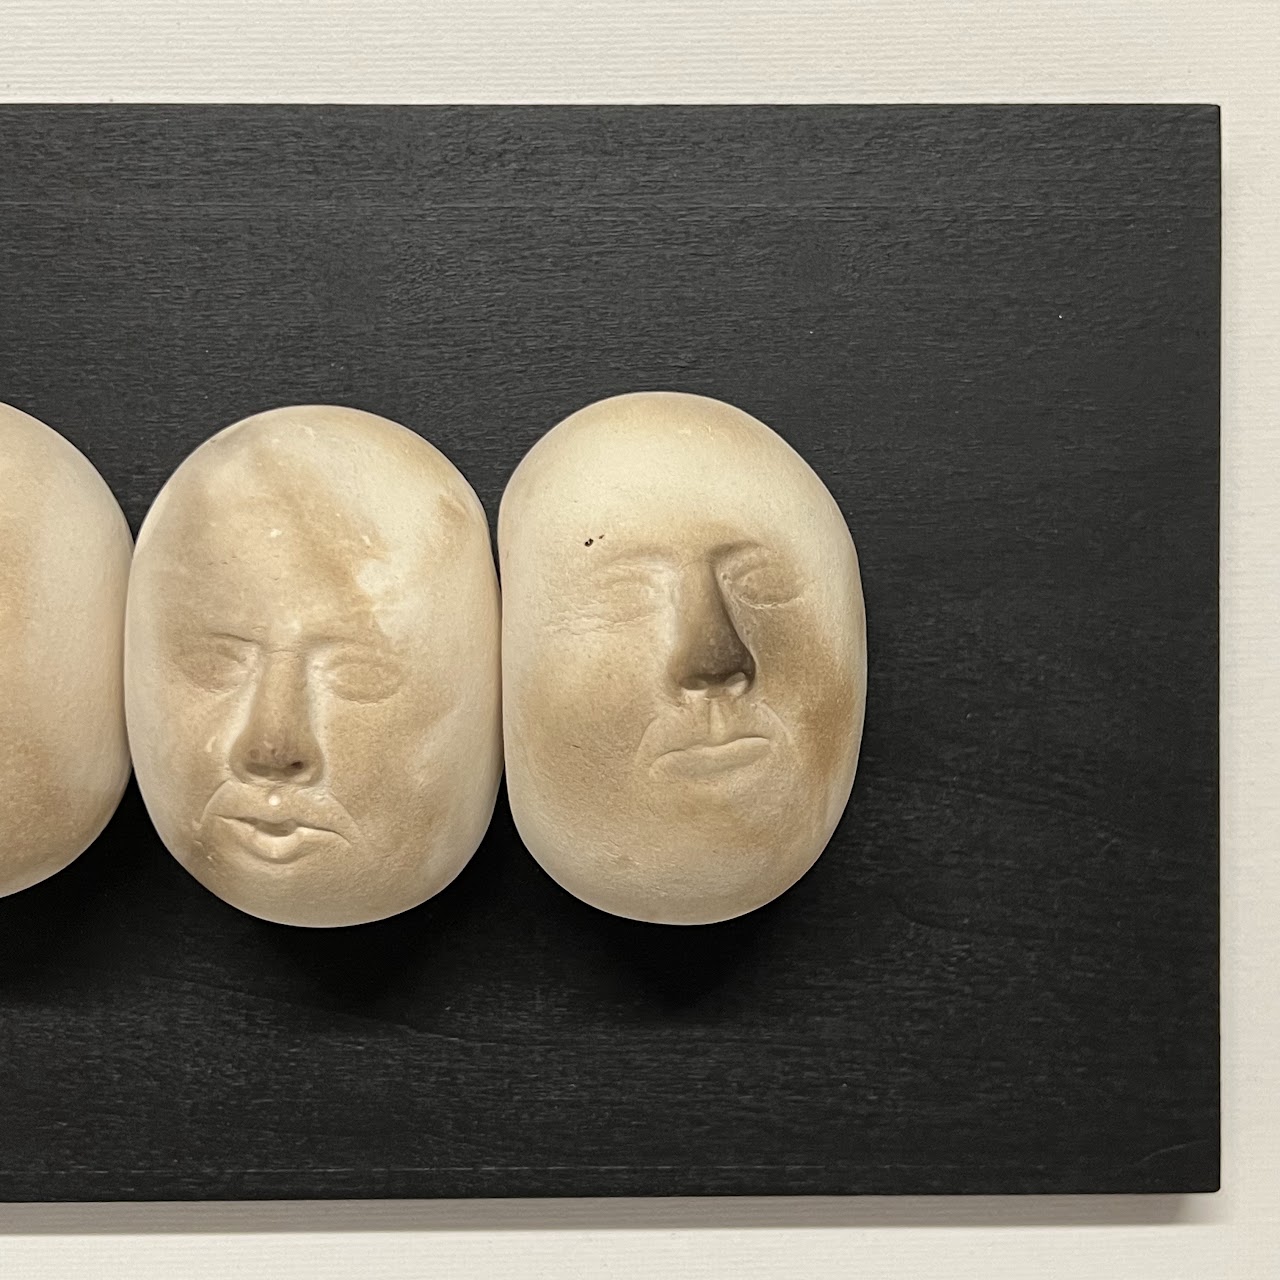 Allen Littlefield 'Group Therapy' Ceramic Sculpture